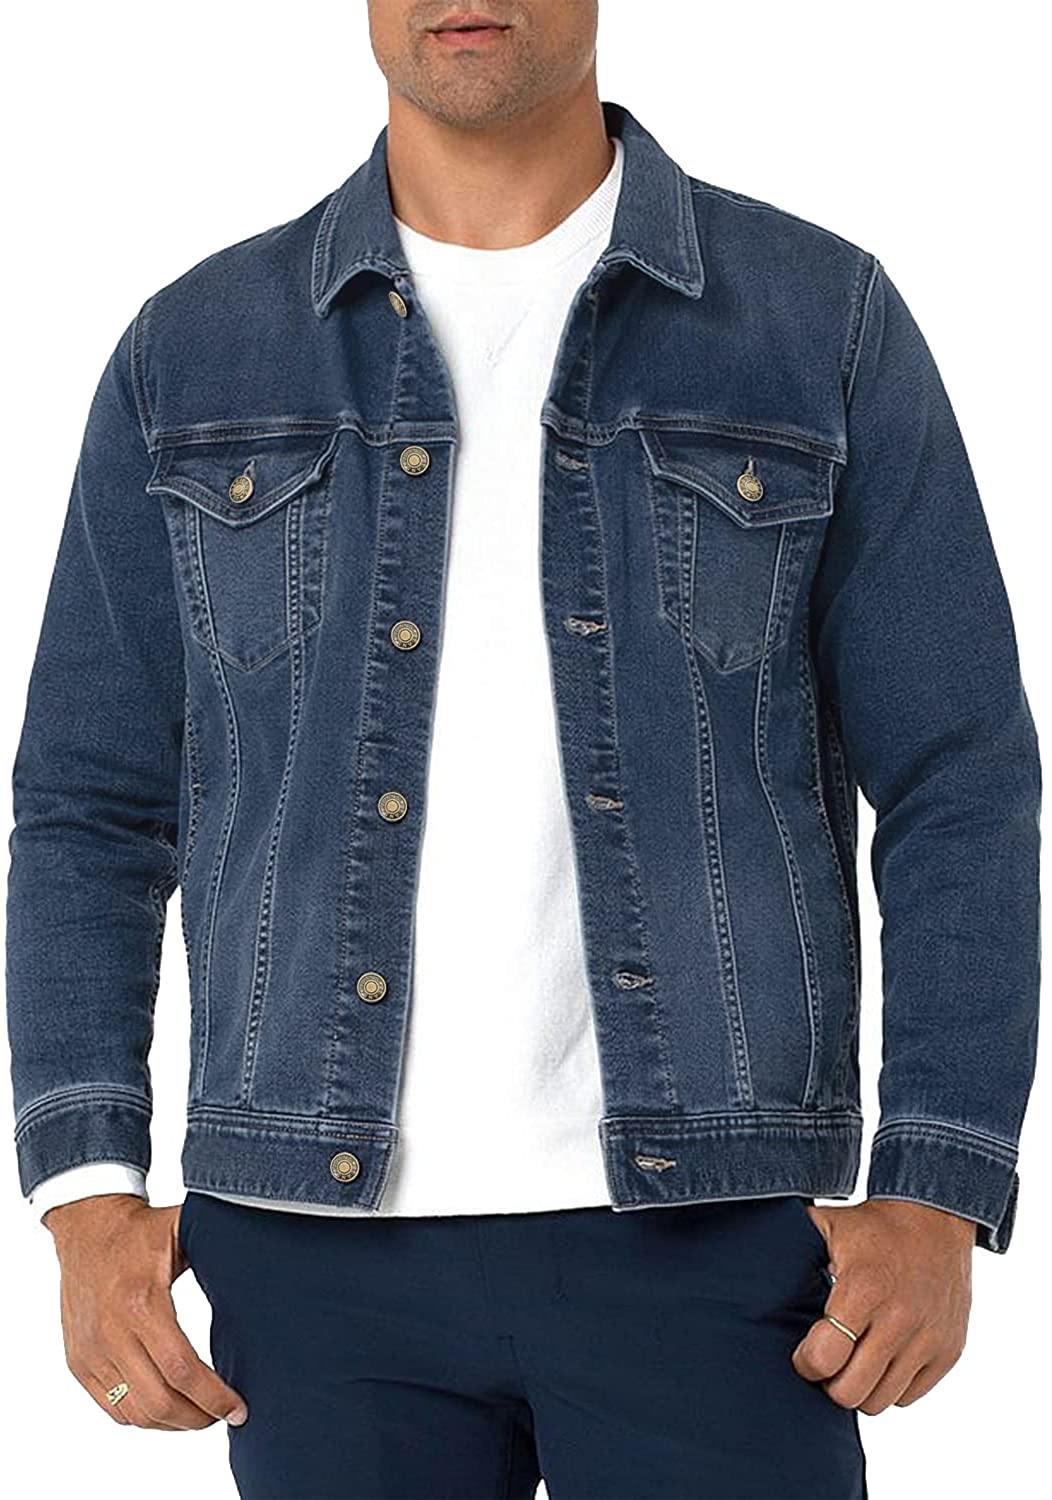 Lavnis Men's Military Trucker Jacket Casual Cotton Button Down Fleece Denim Jacket 